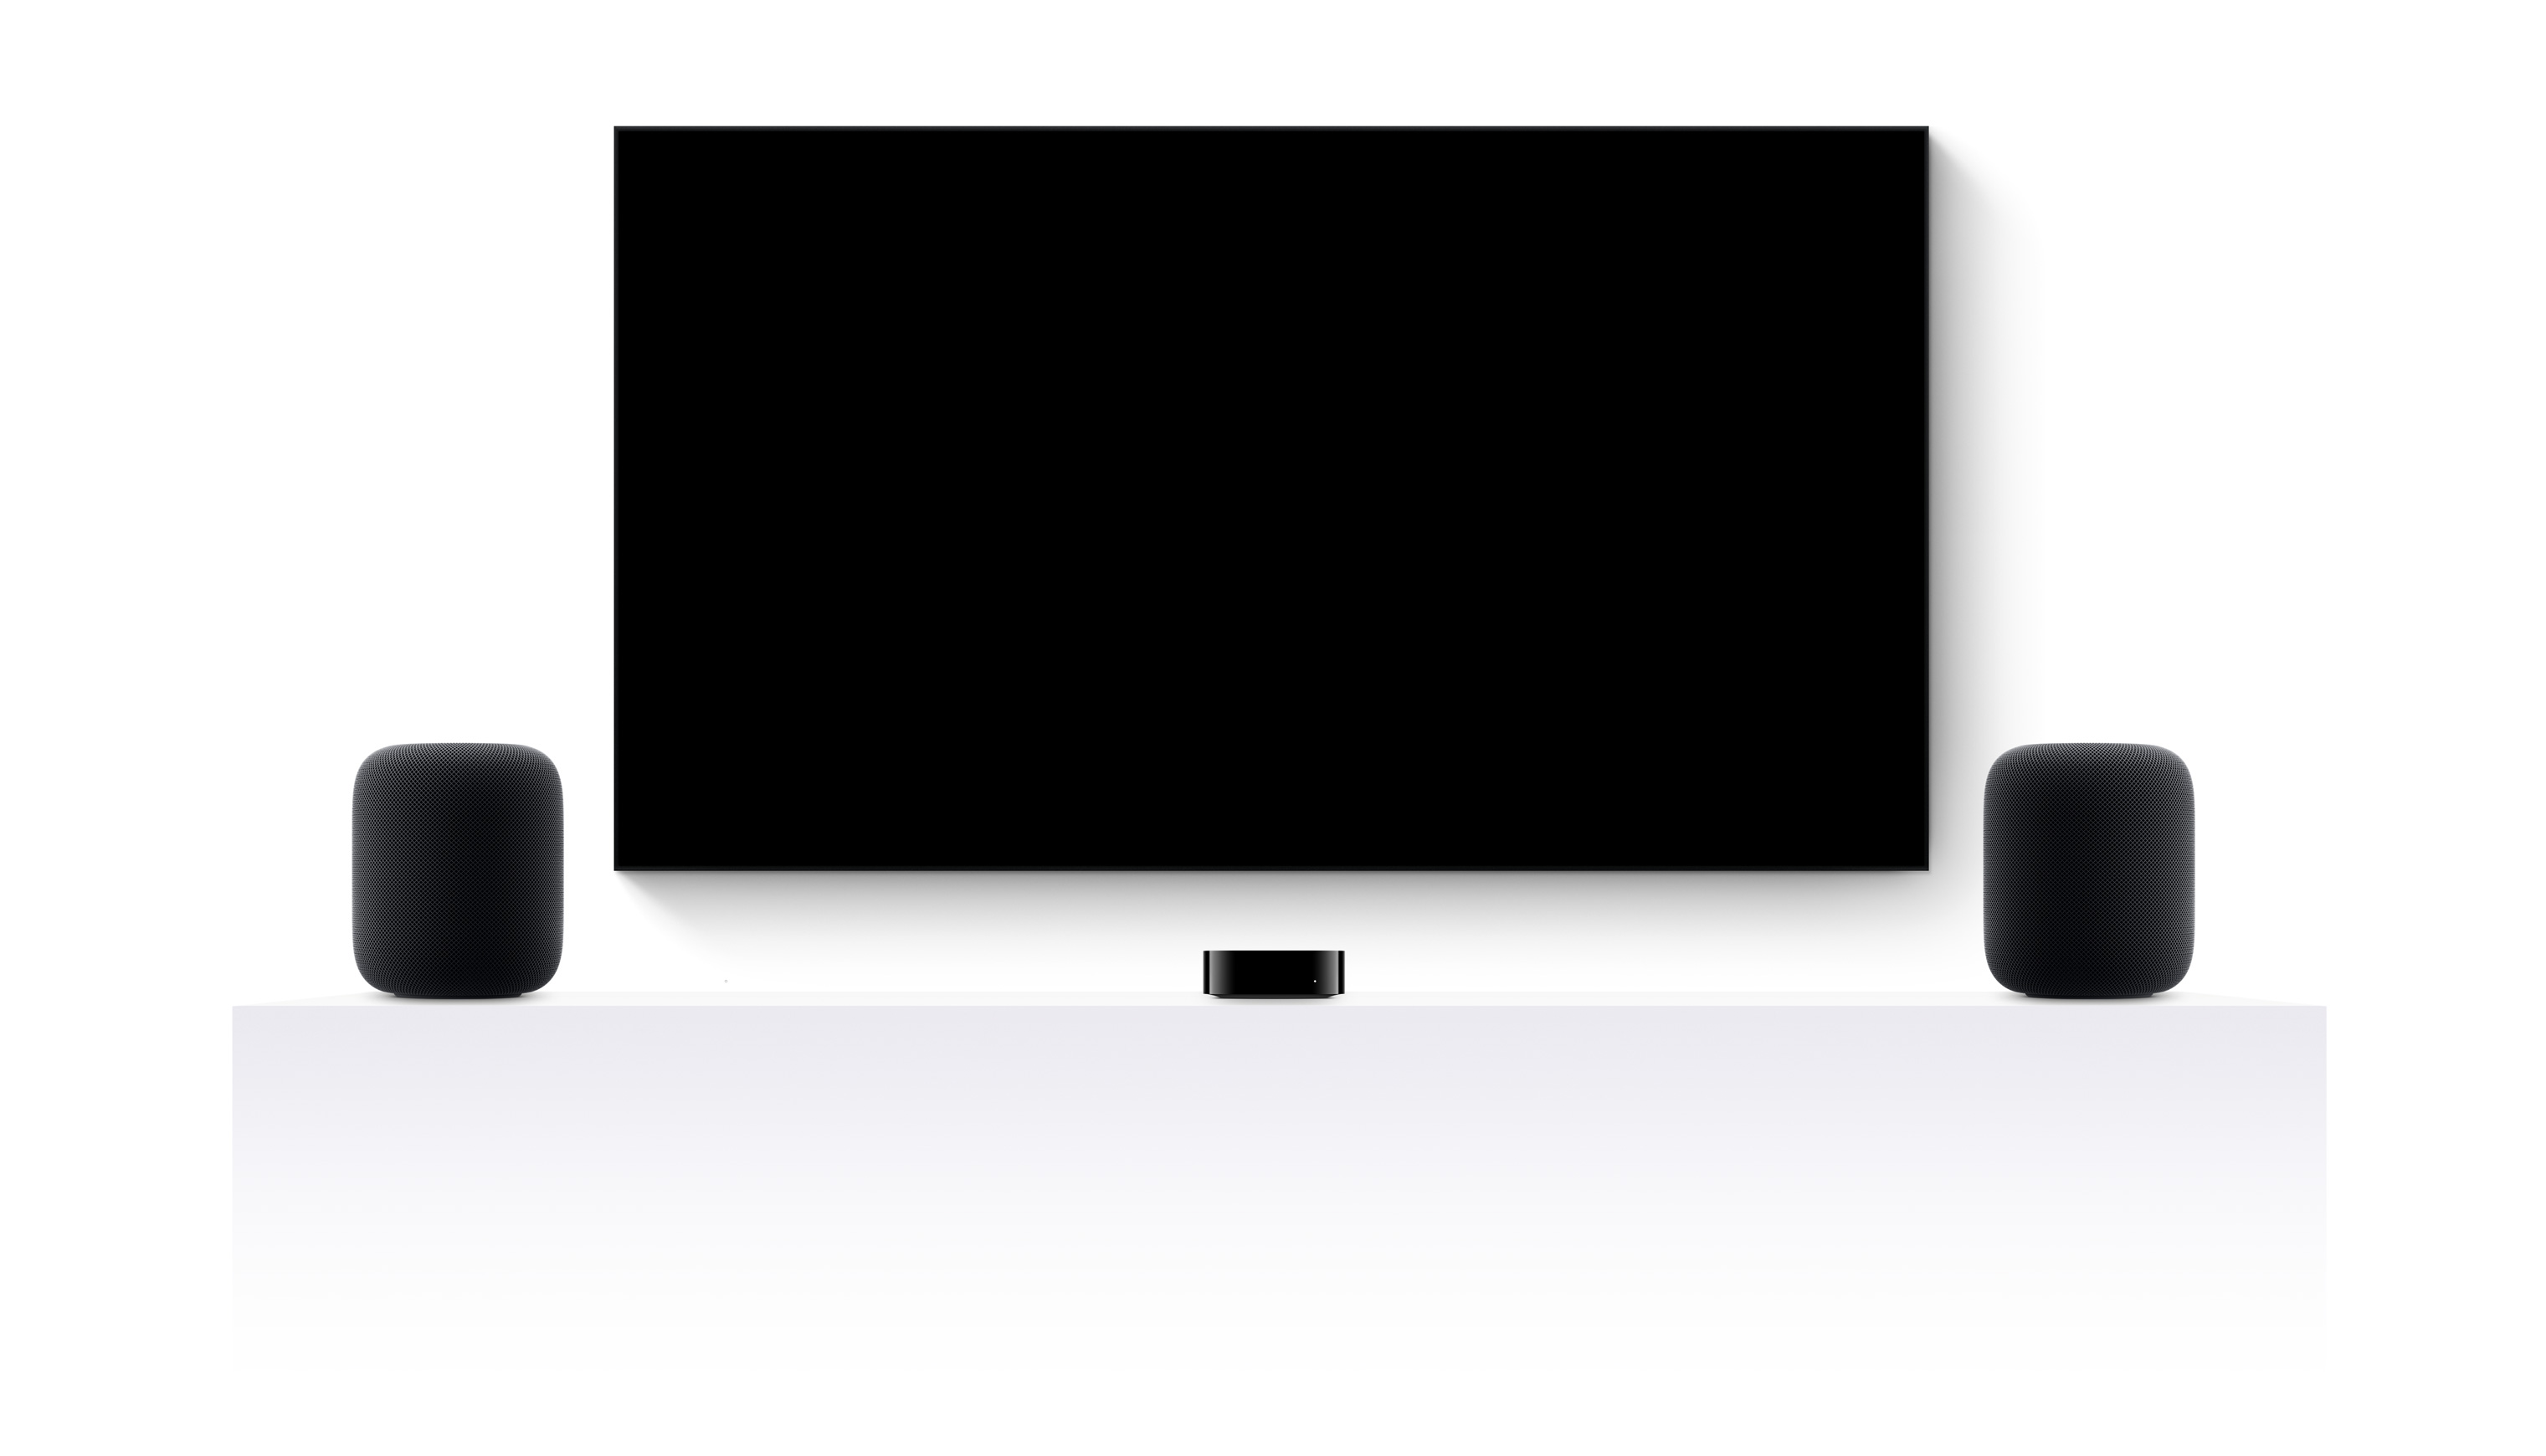 Apple TV 4K、兩部 HomePod 和一部平面電視，螢幕顯示由各種 Apple TV+ 電影與節目剪輯而成的預告片。